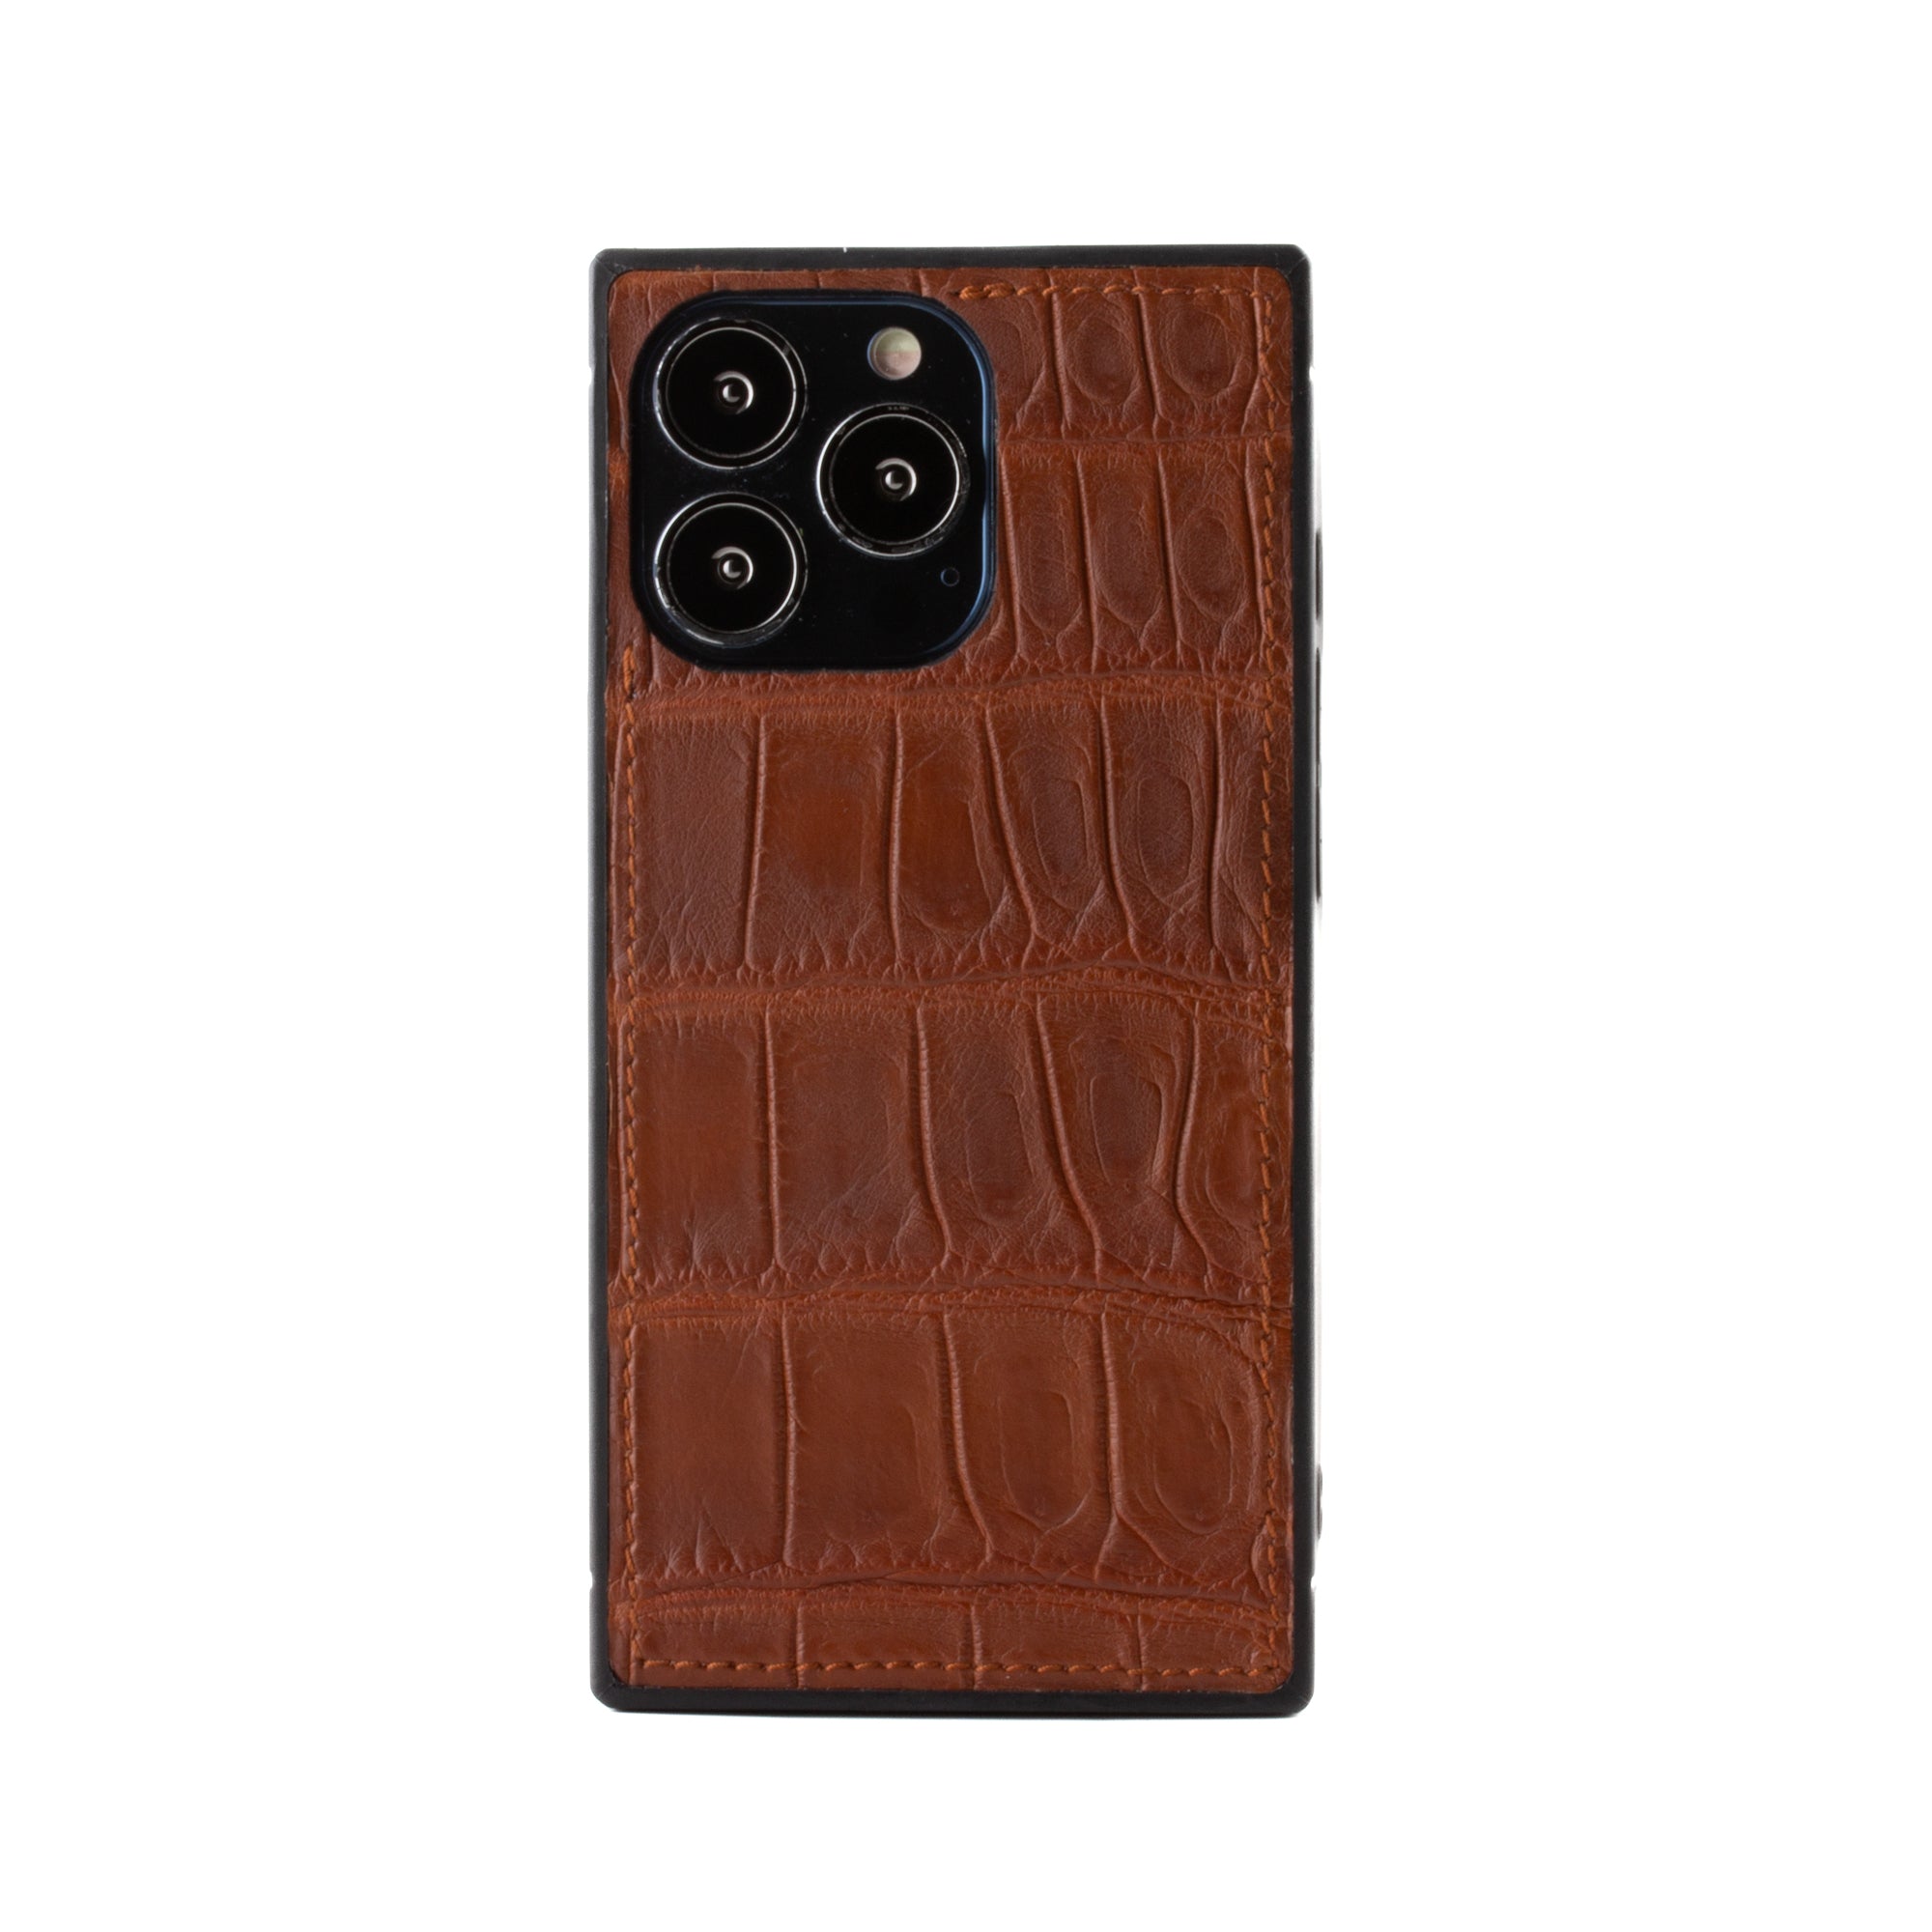 Vente exclusive - Coque "Square case" cuir pour iPhone 13 Pro - Alligator marron 2